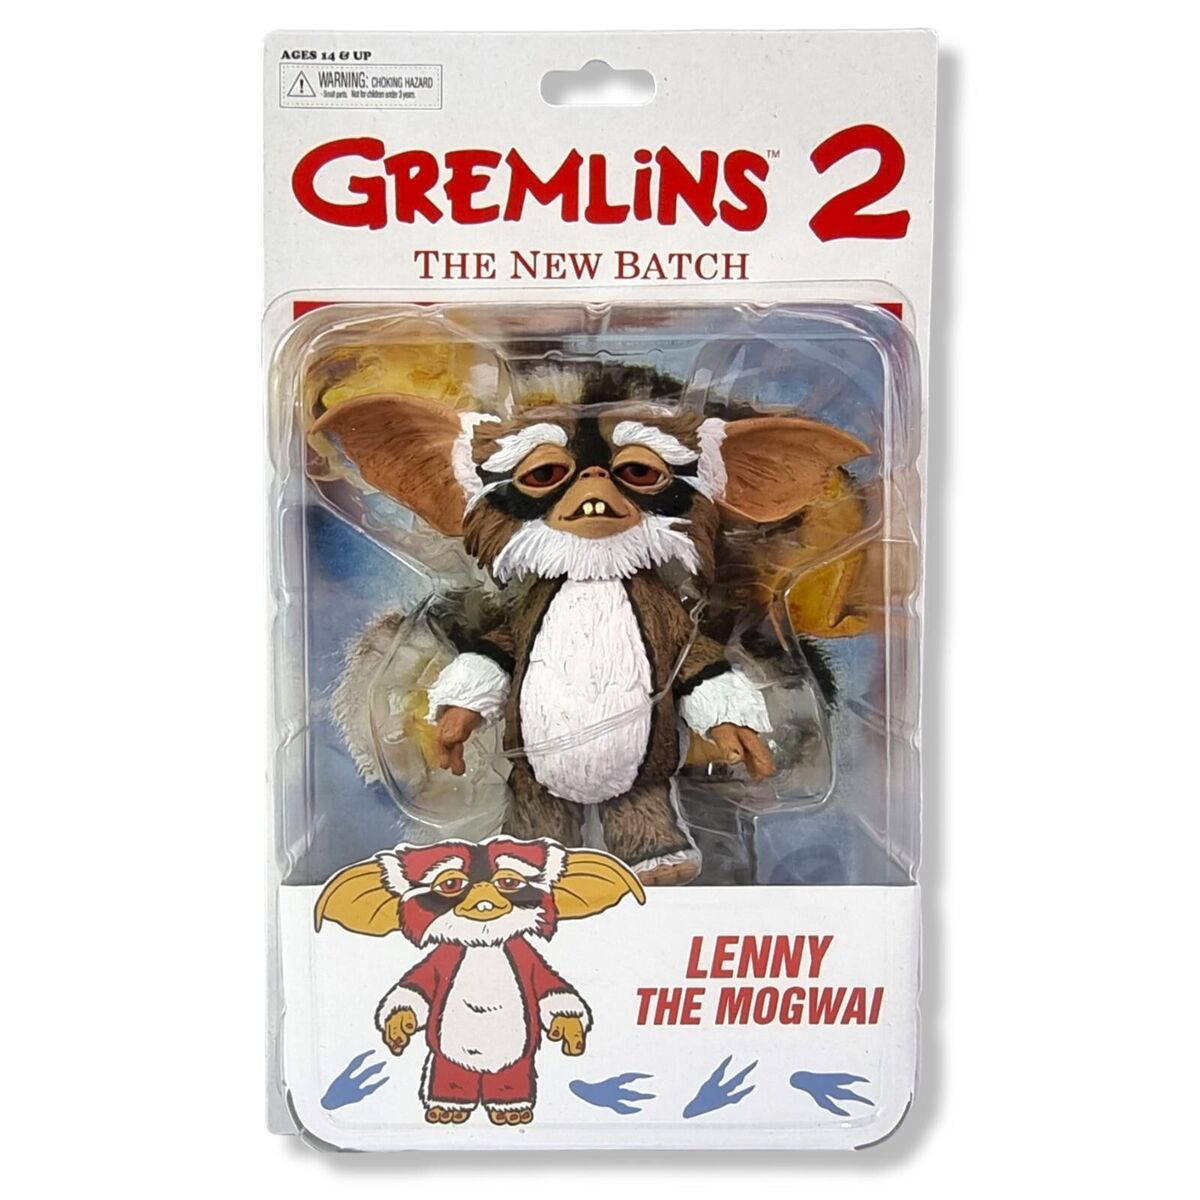 Gremlins 2: The New Batch Lenny the Mogwai Figure